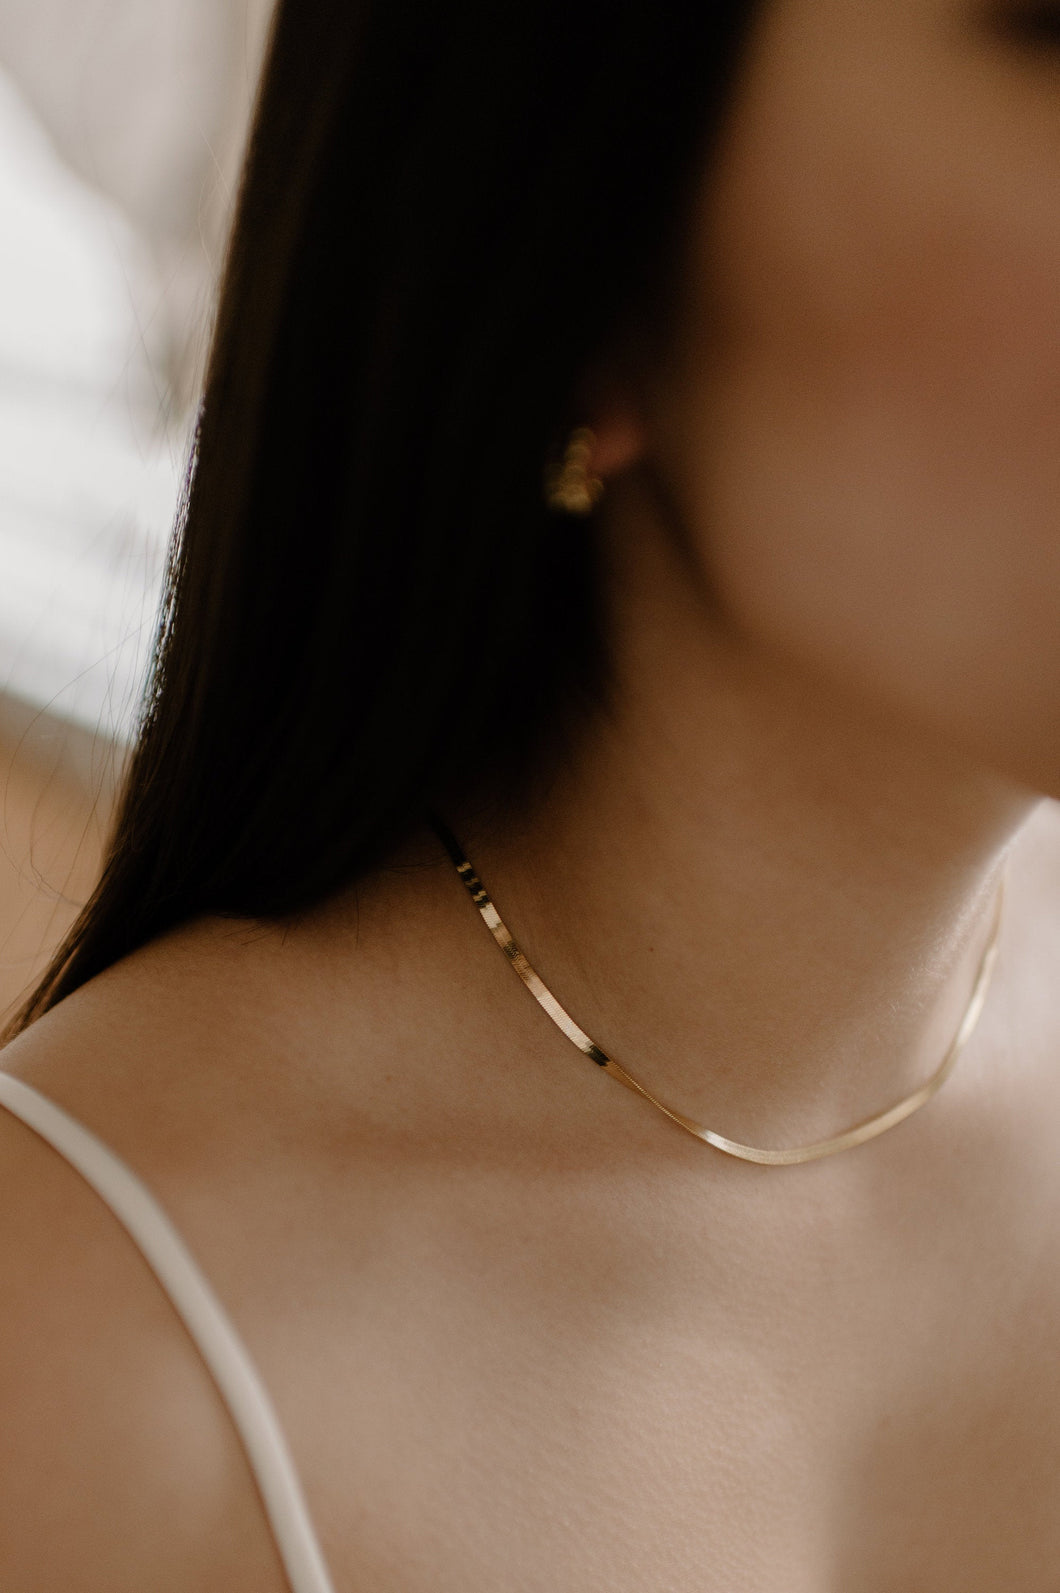 KATIE - Dainty thin flat snake chain herringbone adjustable necklace choker gold plated silver minimalist boho lightweight stacking 45 CM